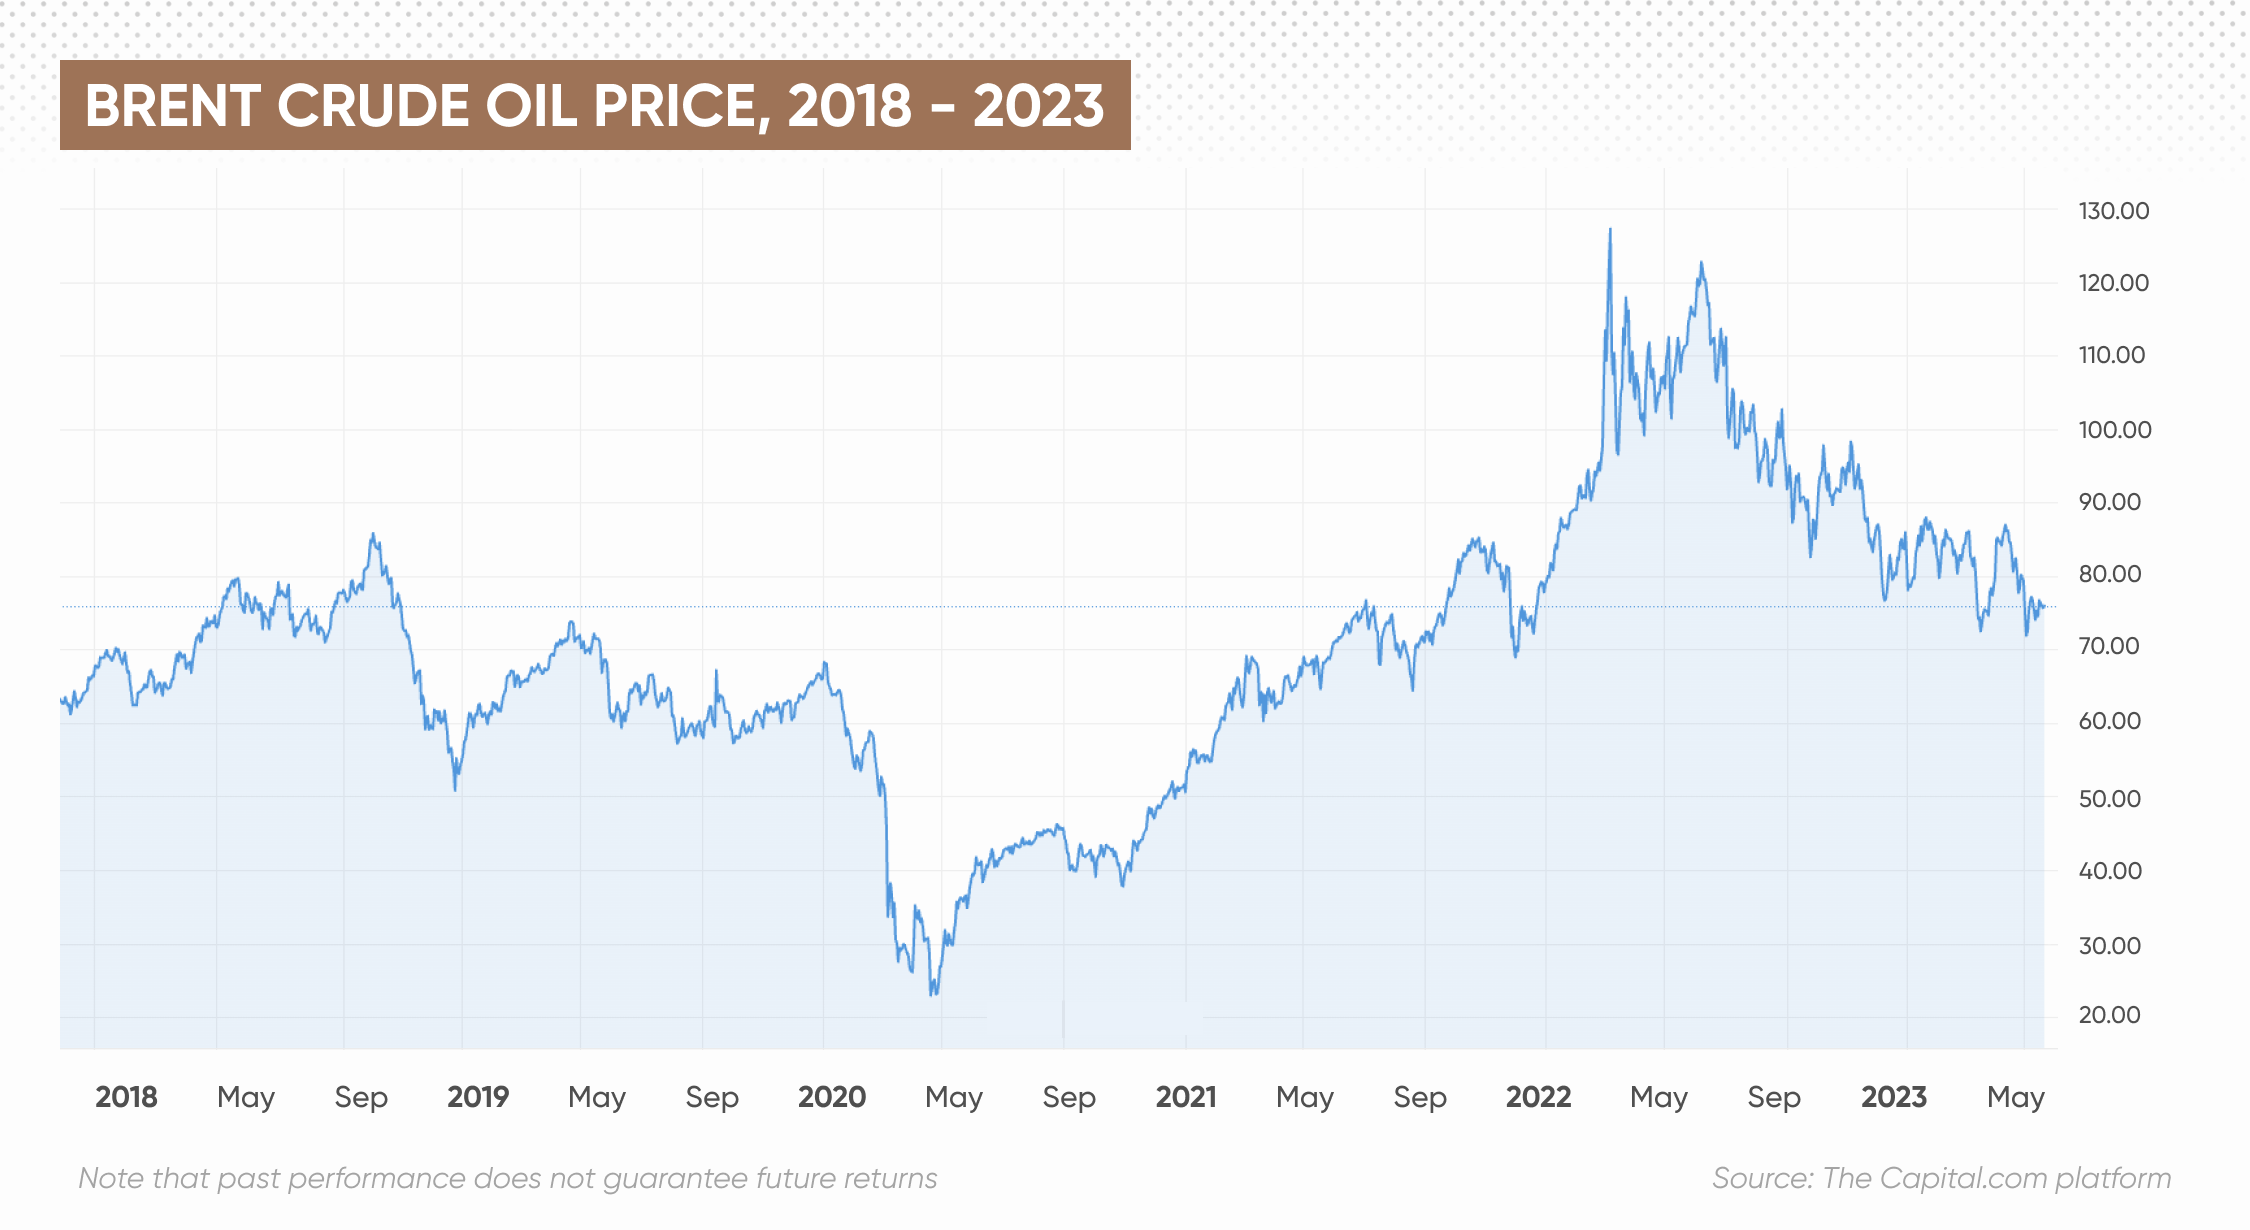 Brent crude oil price, 2018 - 2023